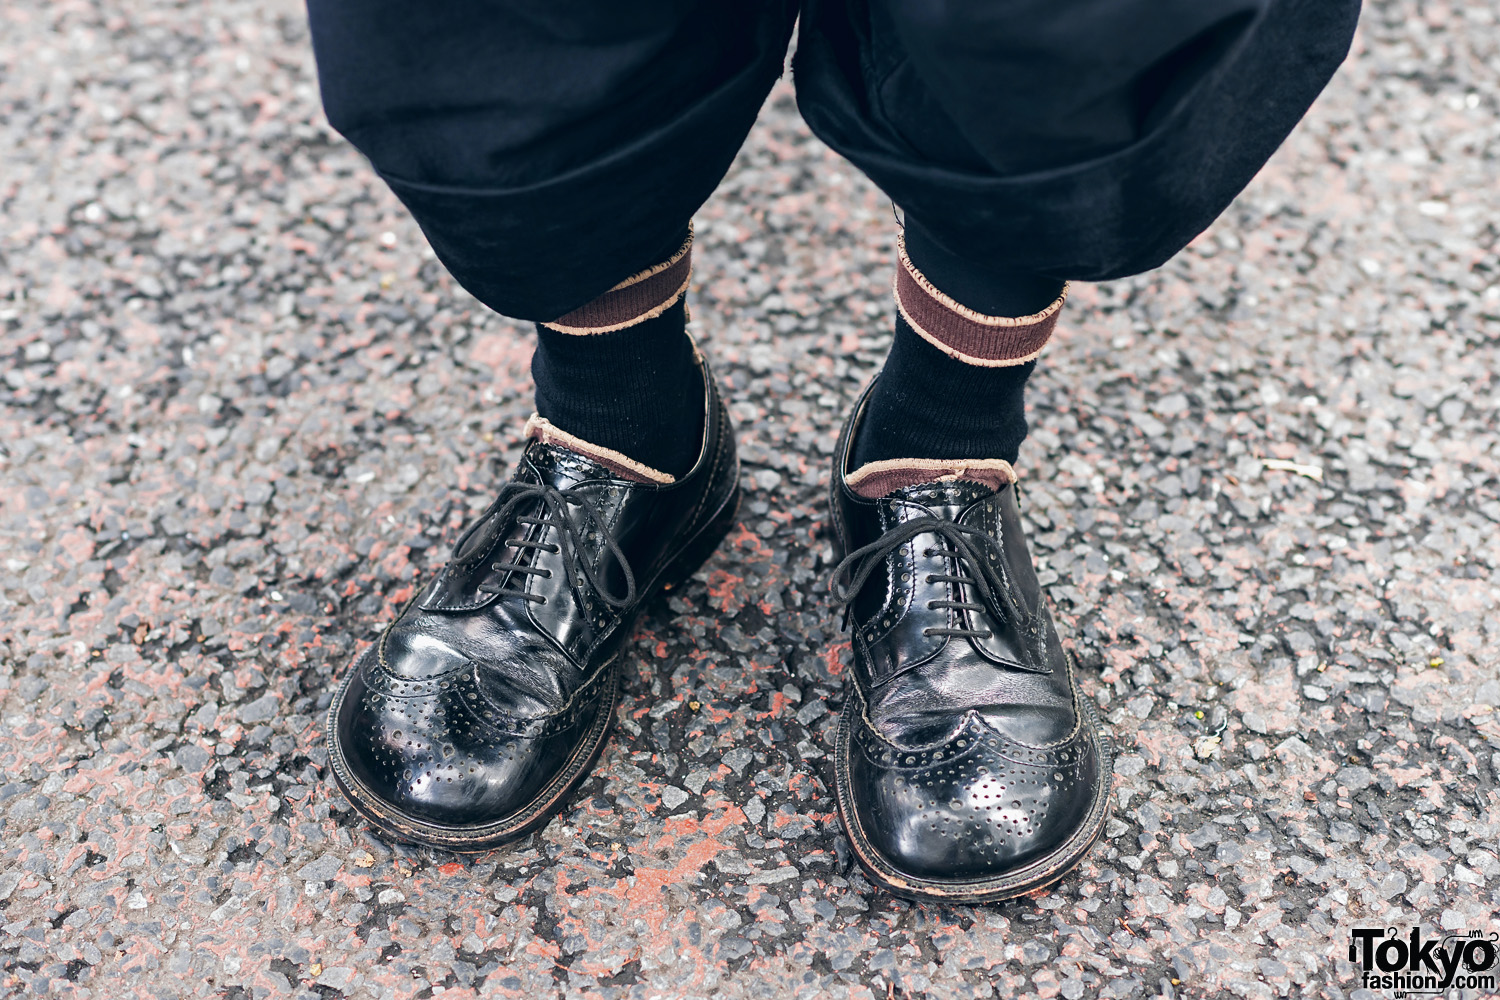 Christopher Nemeth Menswear Street Style w/ Rope Print Newsboy Cap, Vest,  Ruffled Shirt, Cuffed Pants, Rope Bag & Leather Shoes – Tokyo Fashion